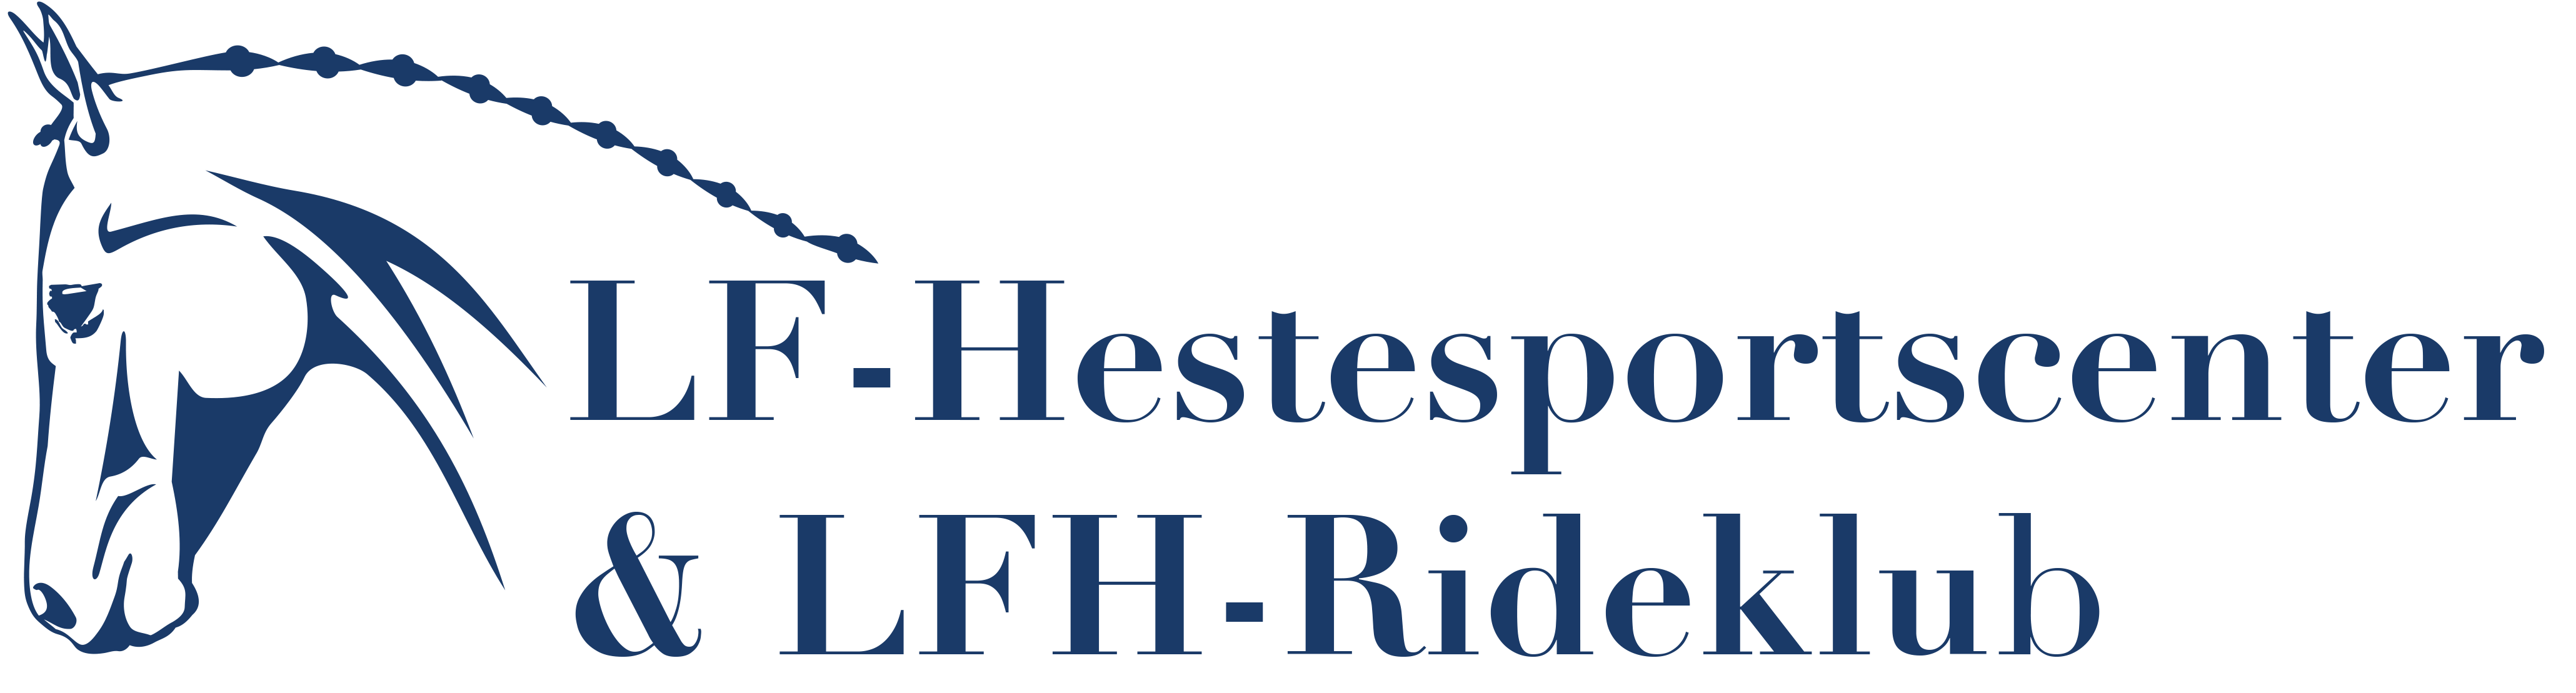 LF Hestesportscenter & LFH Rideklub